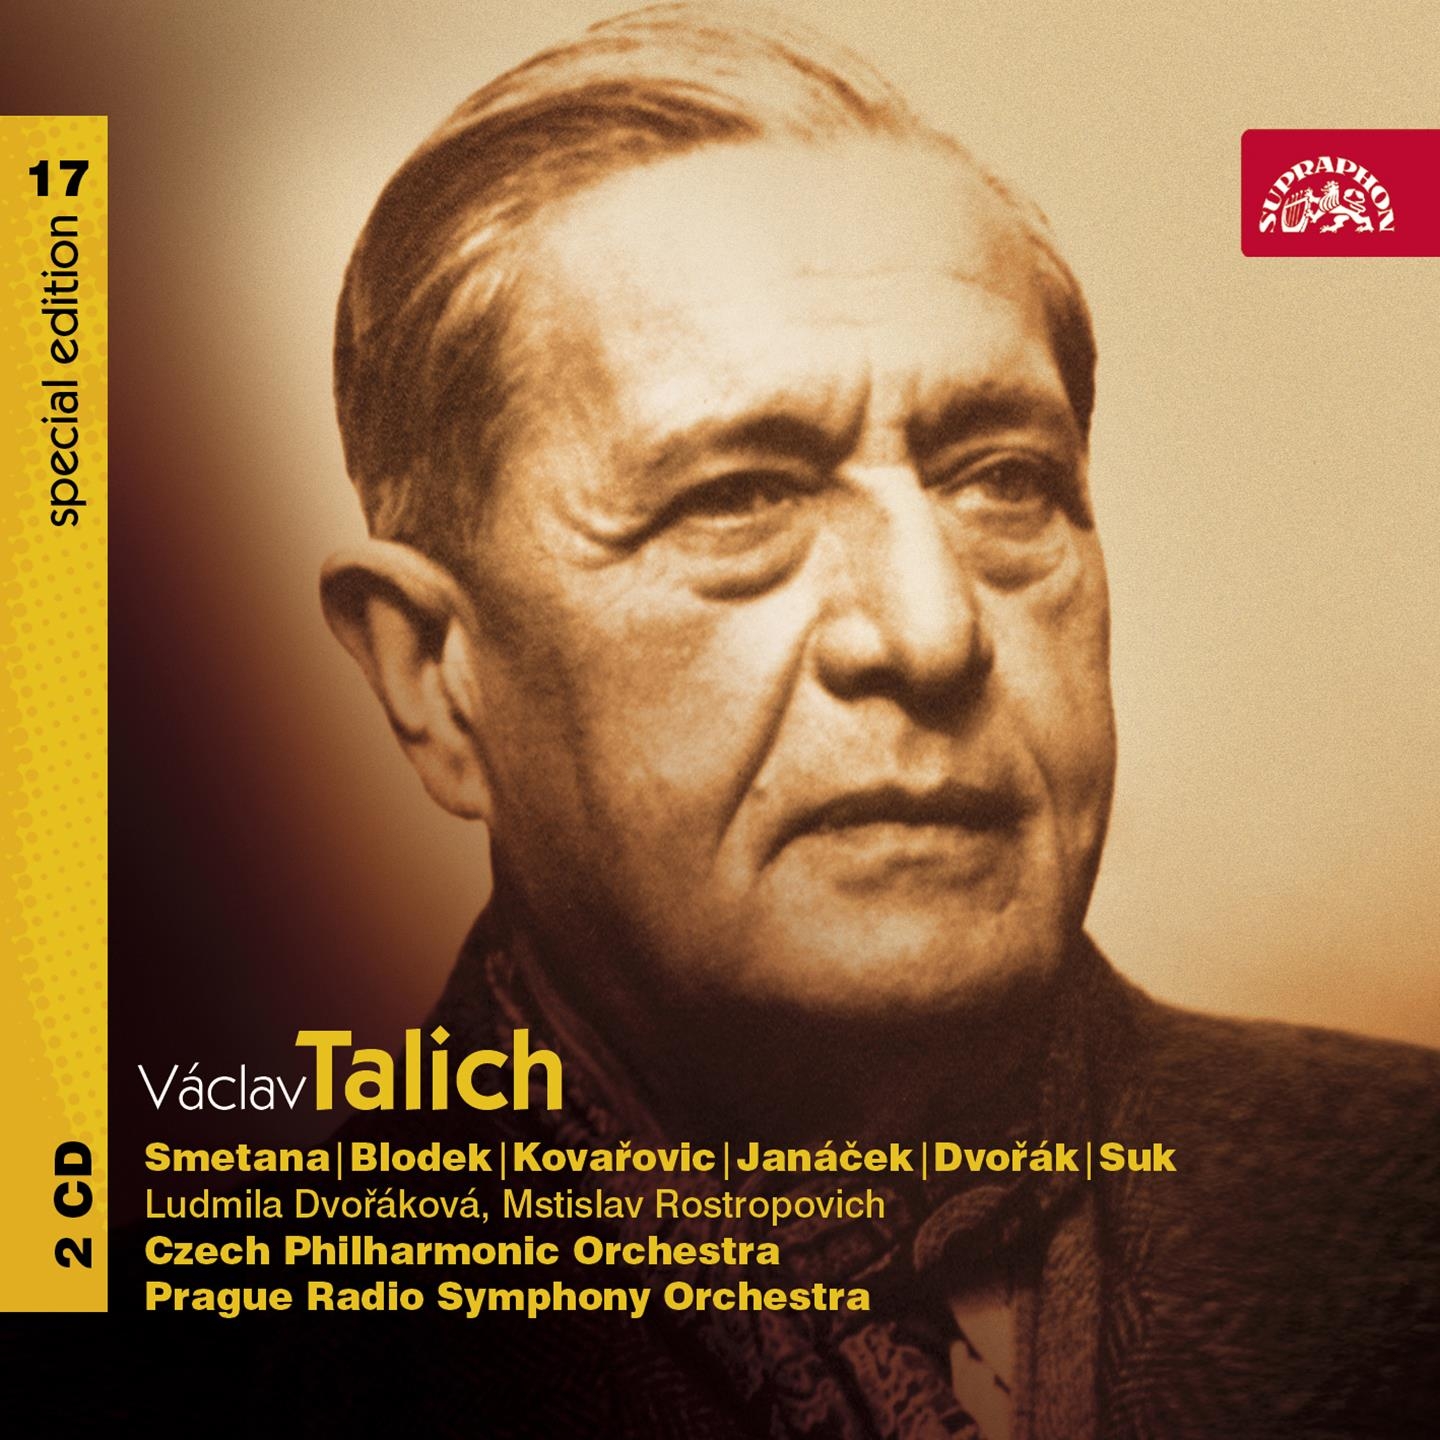 Talich Special Edition 17. Dvoa k, Jana ek, Smetana, Suk, Kova ovic, Blodek, Smetana